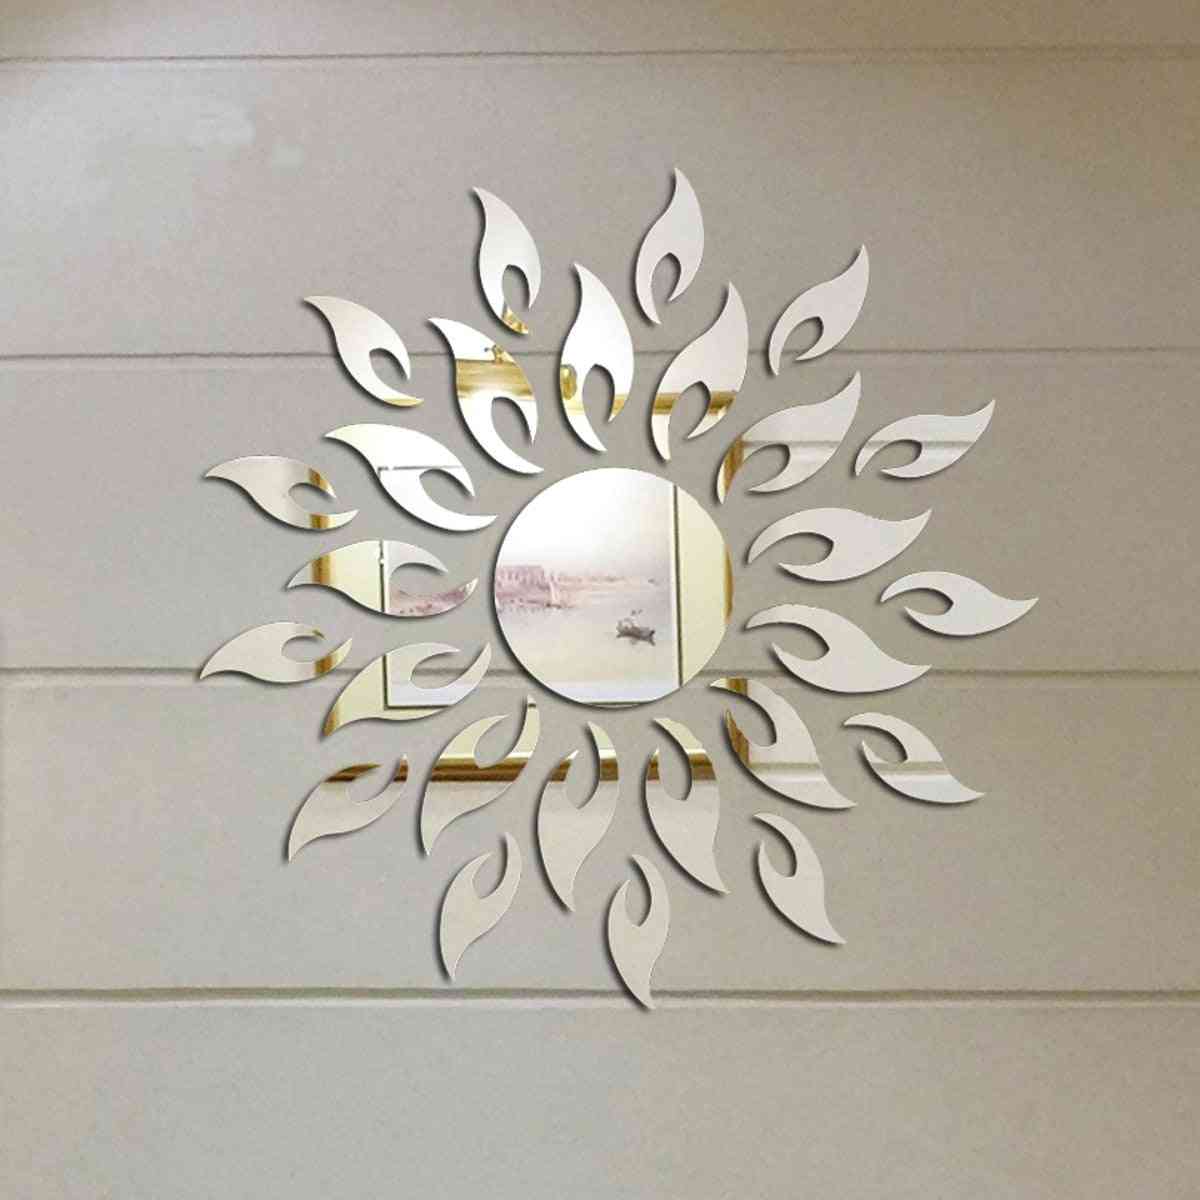 Etiqueta engomada desprendible decorativa del espejo de la pared de diy de la flor del sol de la sol 3d